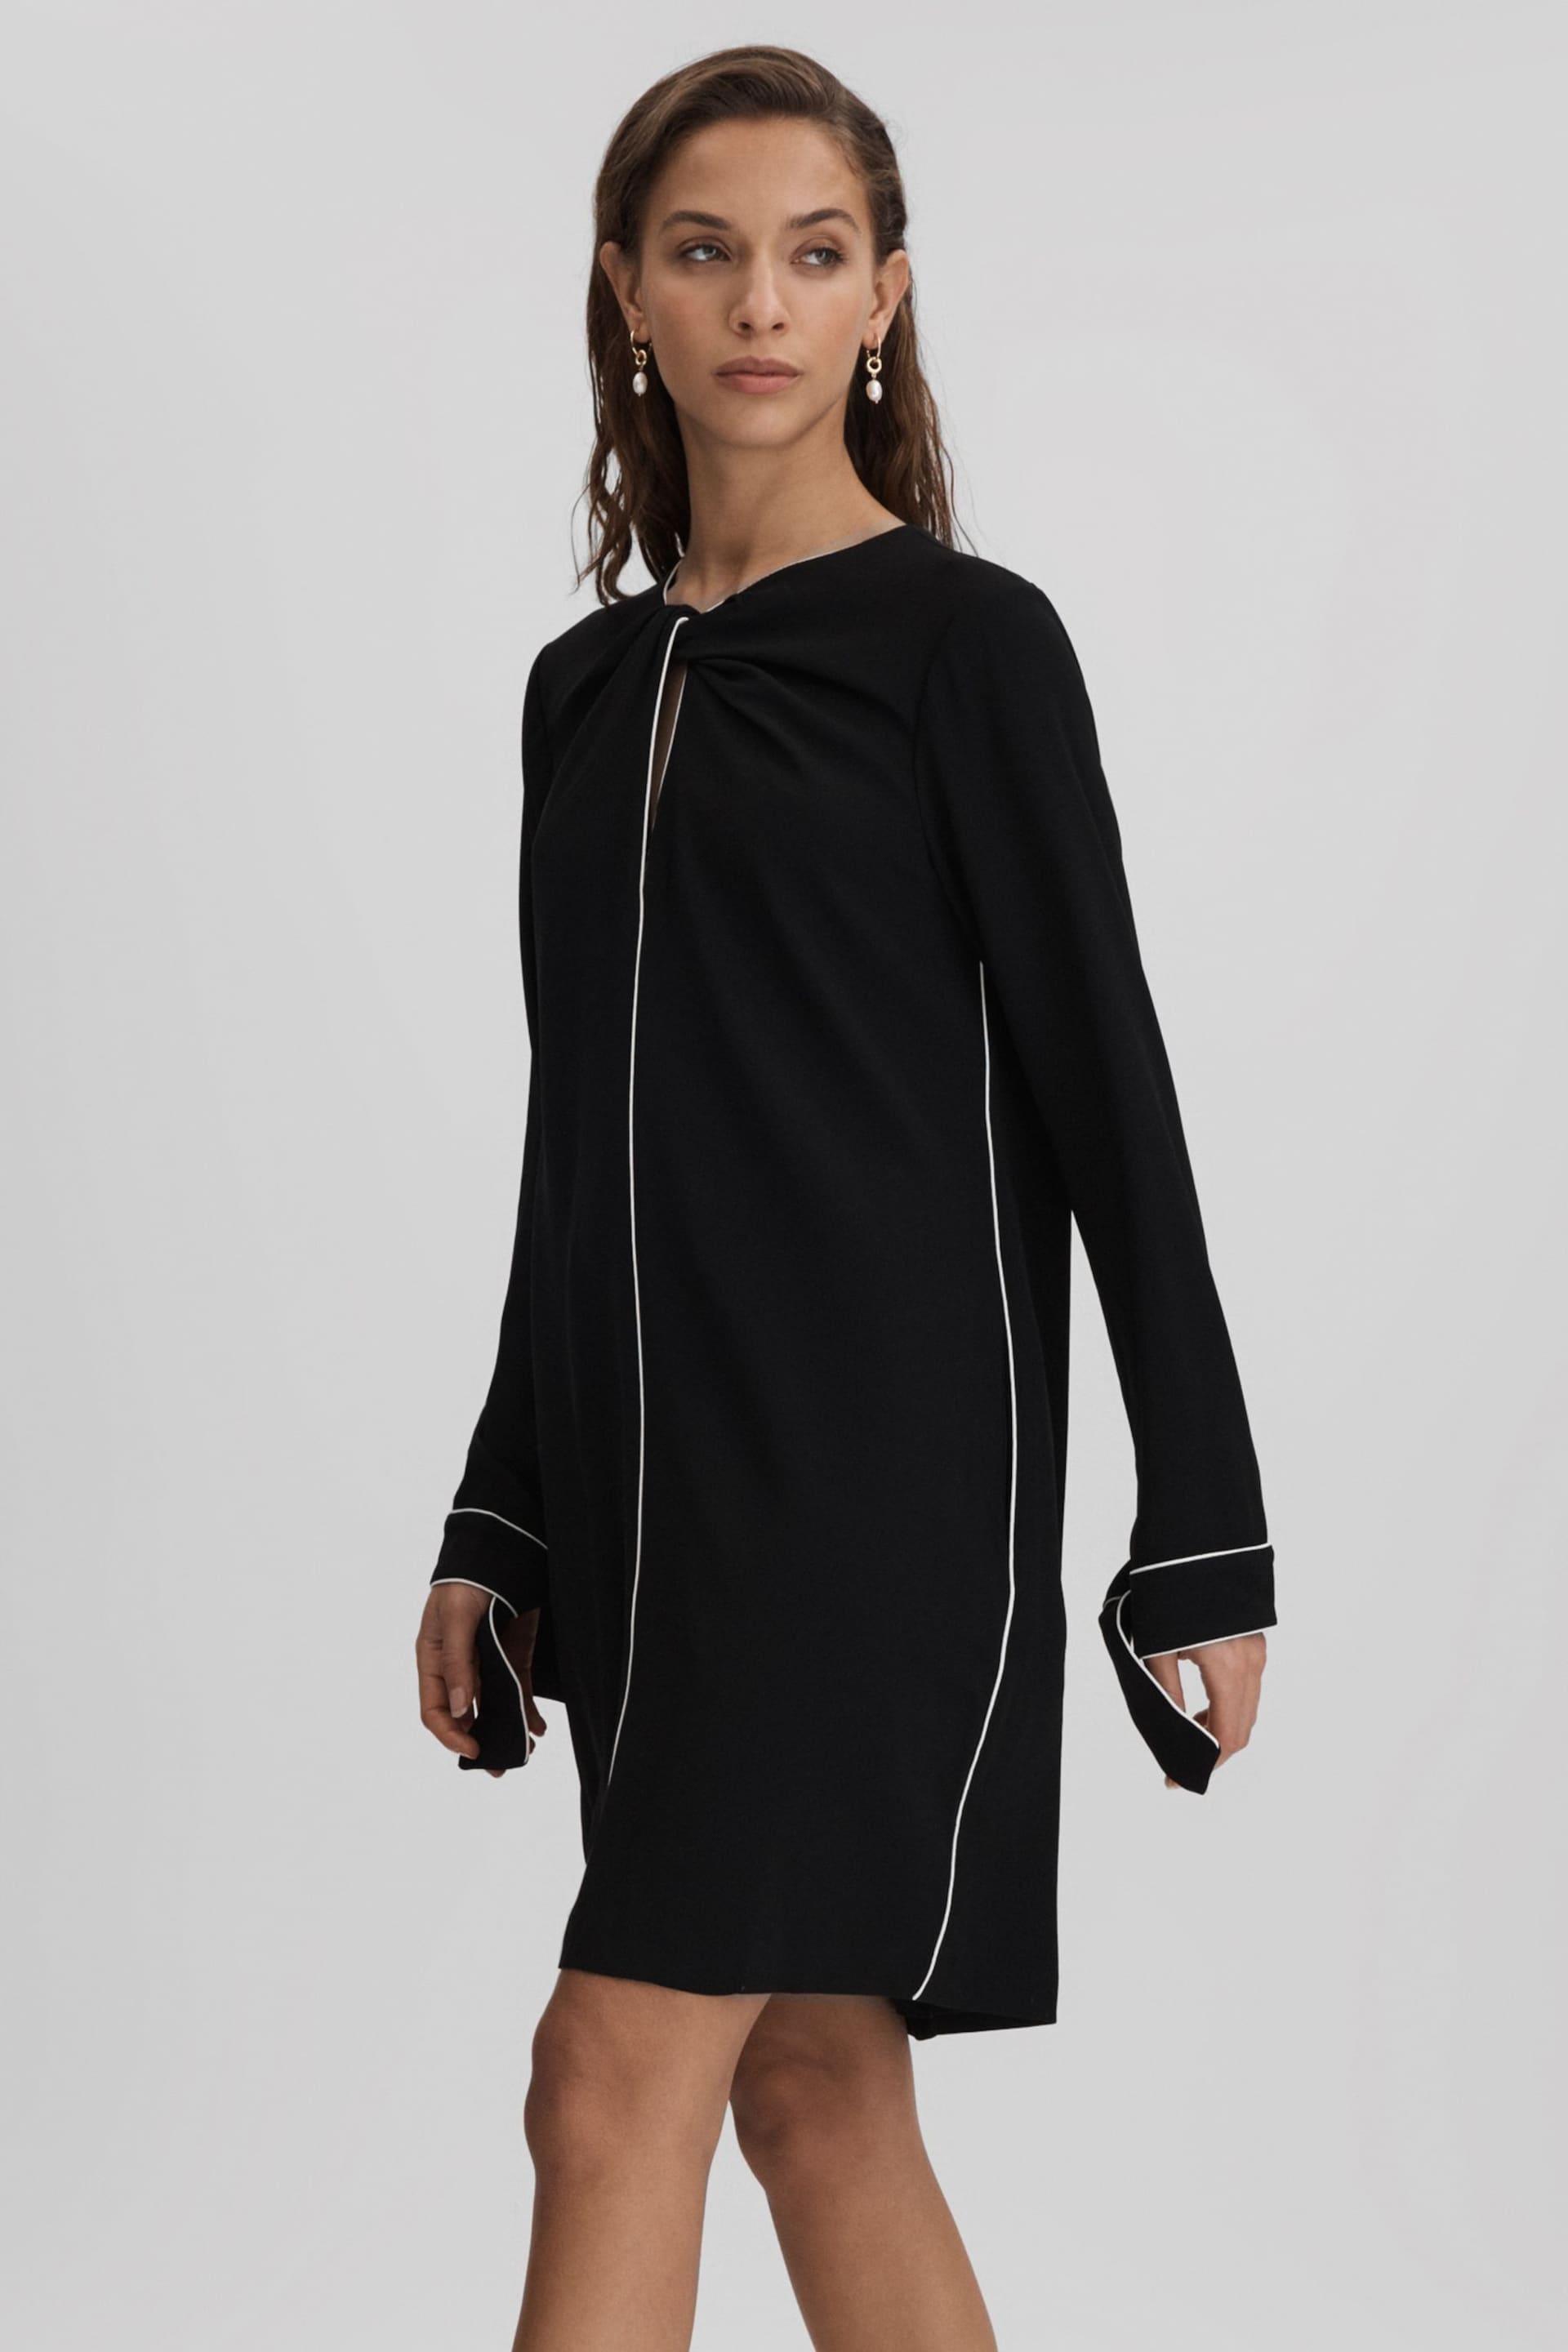 Reiss Black Eloise Shift Mini Dress - Image 1 of 7